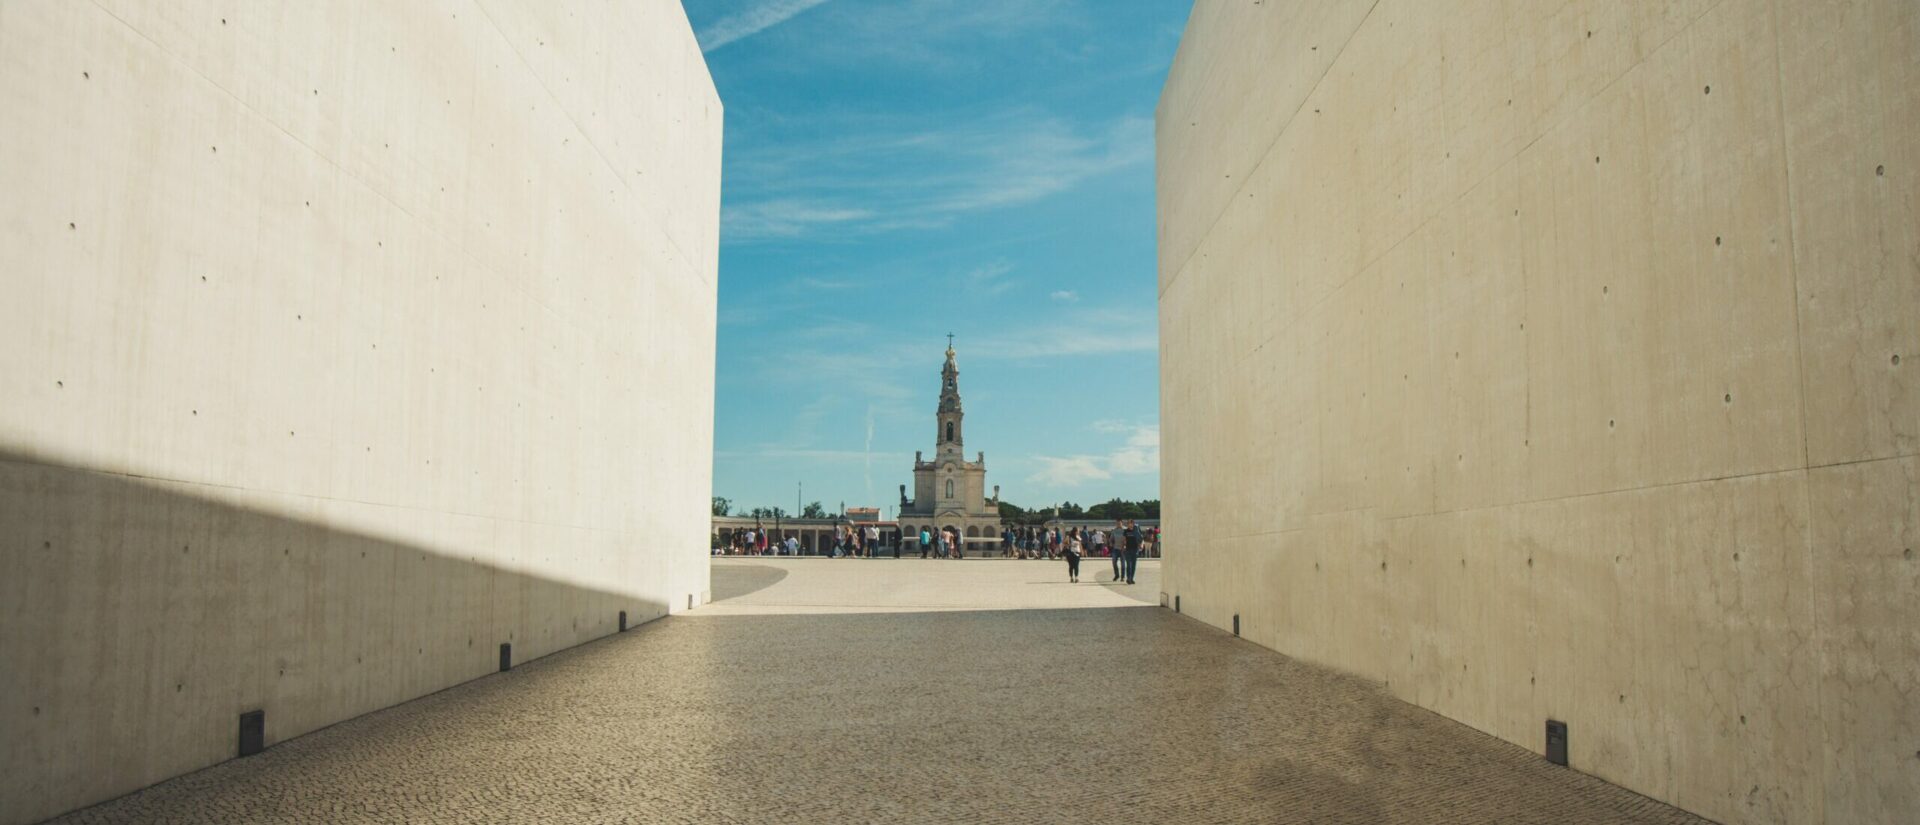 Le sanctuaire de Fatima, au Portugal | © Tania Mousinho/Unsplash